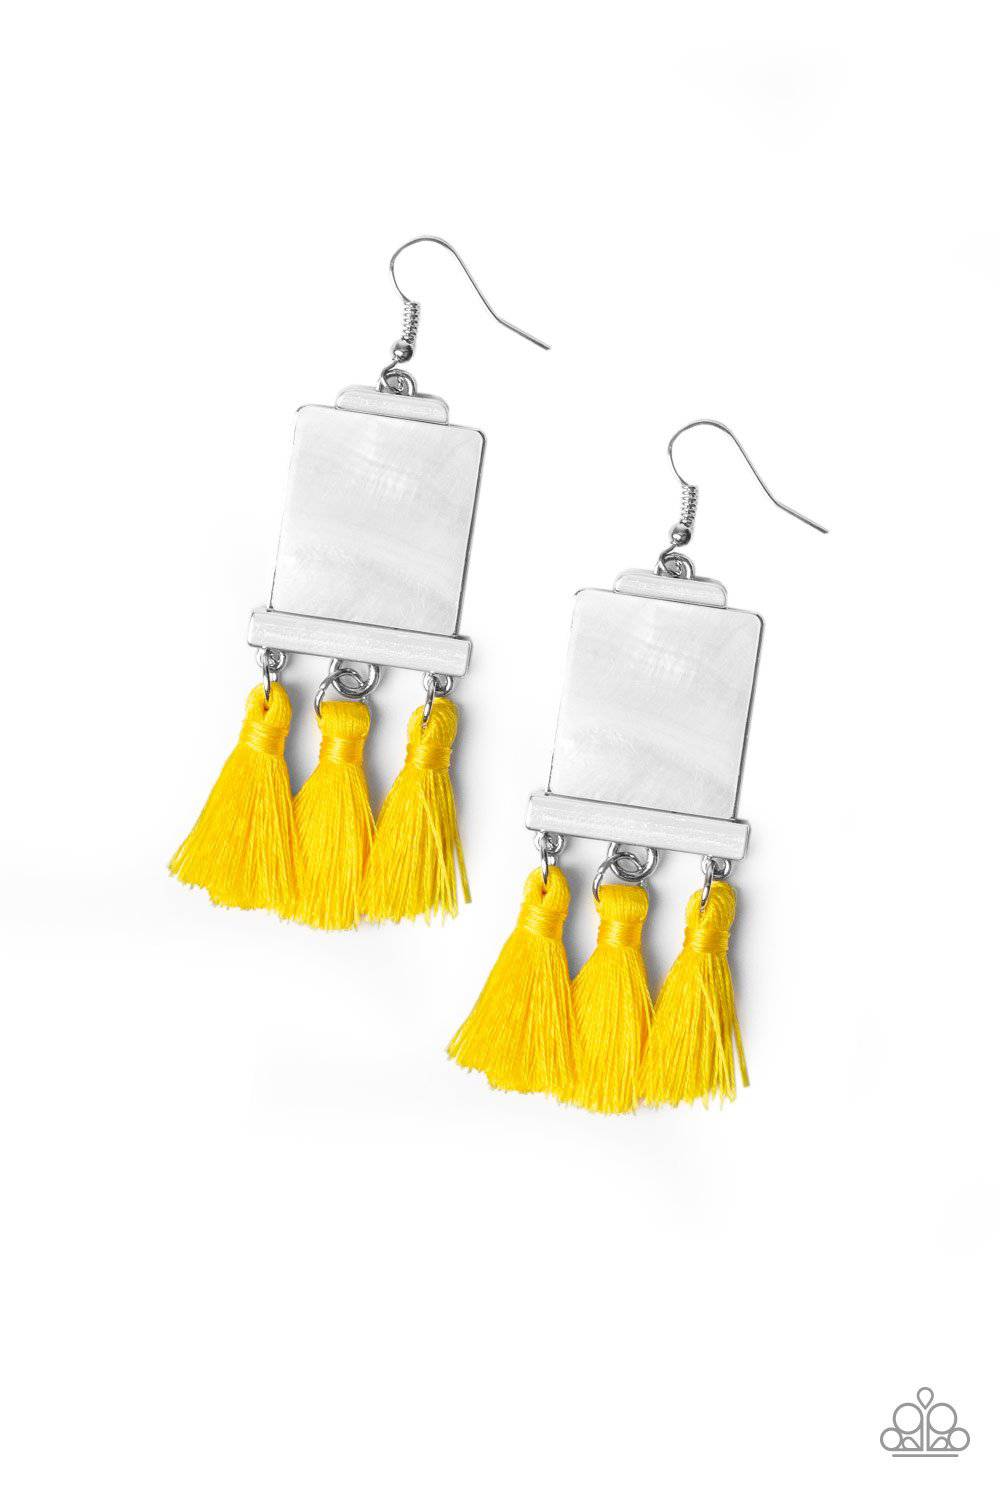 Tassel Retreat - Yellow Tassel Earrings - Paparazzi Accessories - GlaMarous Titi Jewels